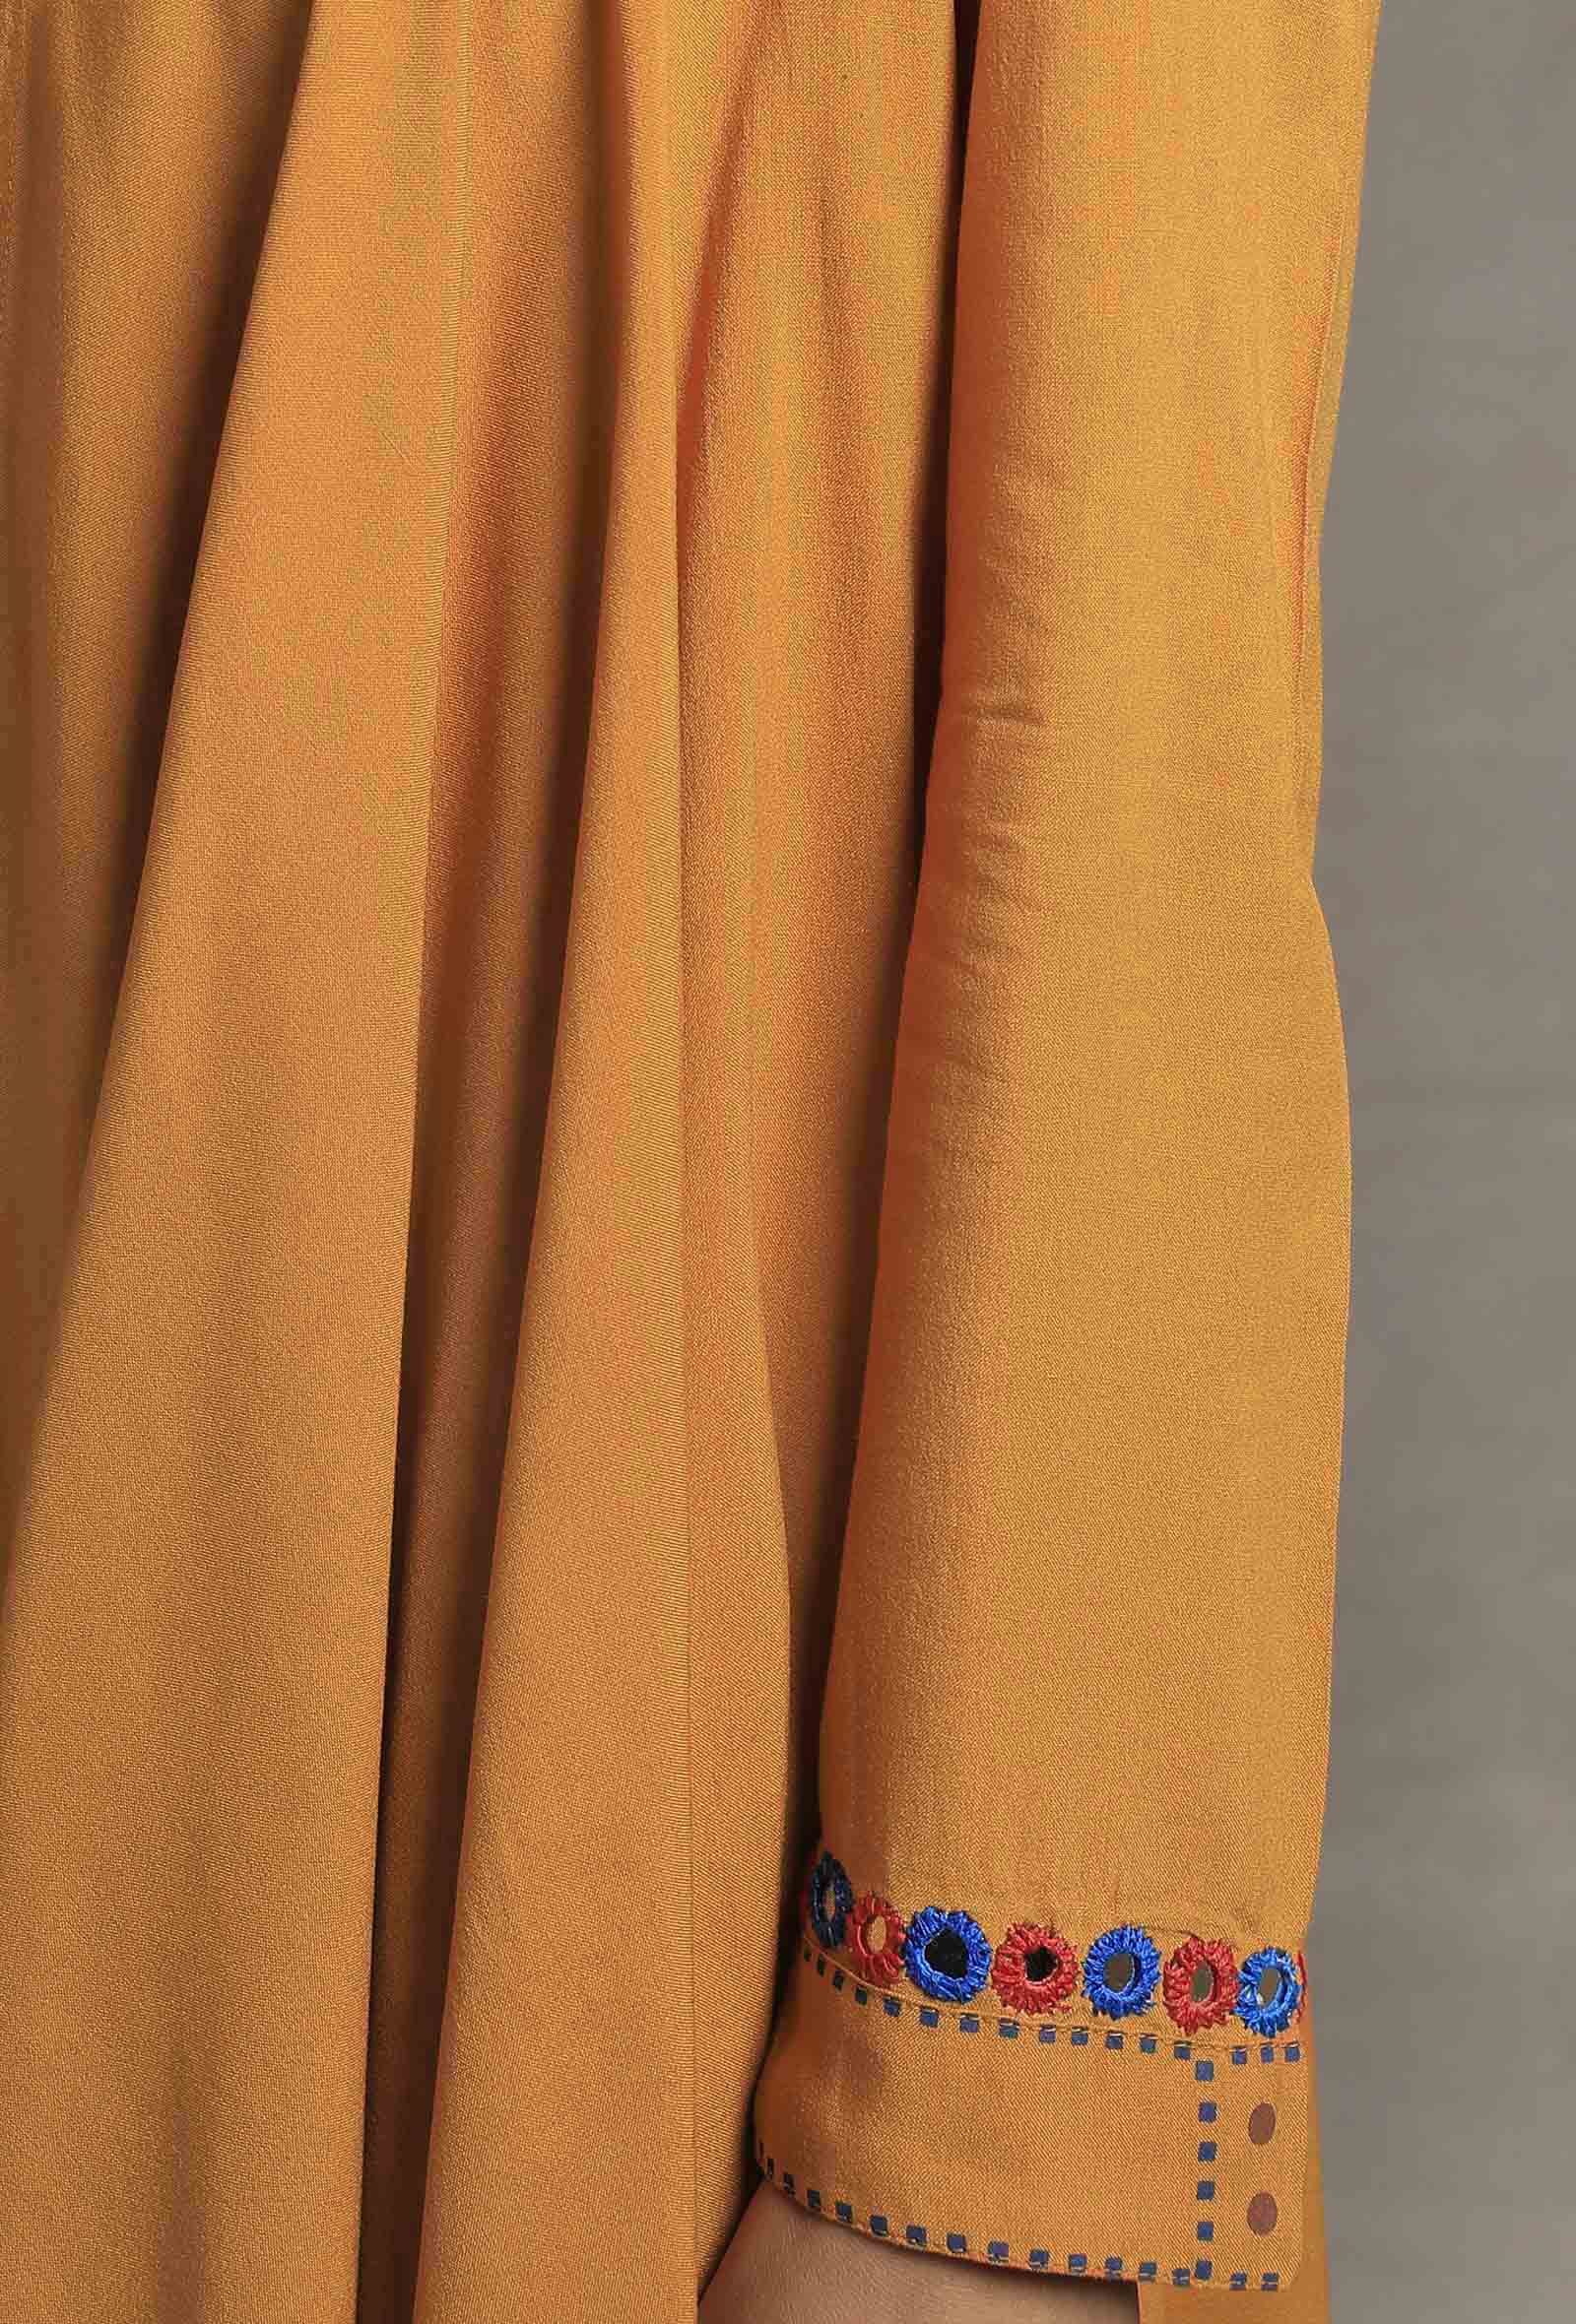 Set of 2: Mustard Yellow Hand Block Printed Kalidar Long Skirt with Mustard Yellow Front Open Asymmetrical Top